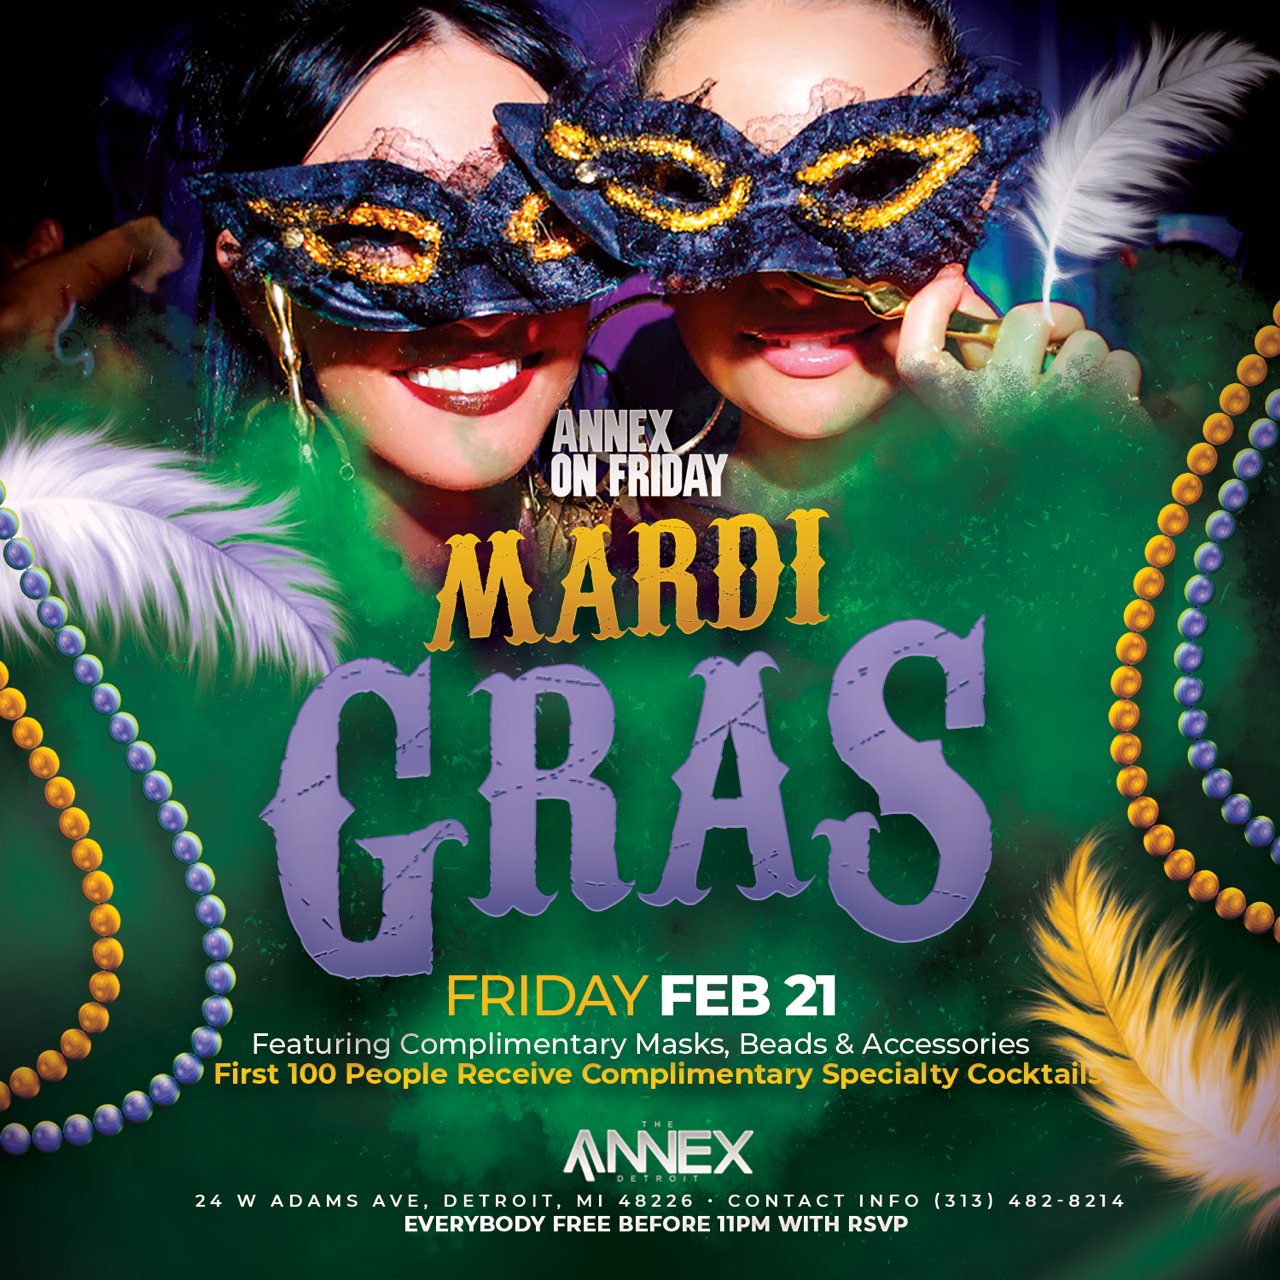 Annex On Friday presents Mardi Gras on February 21st!